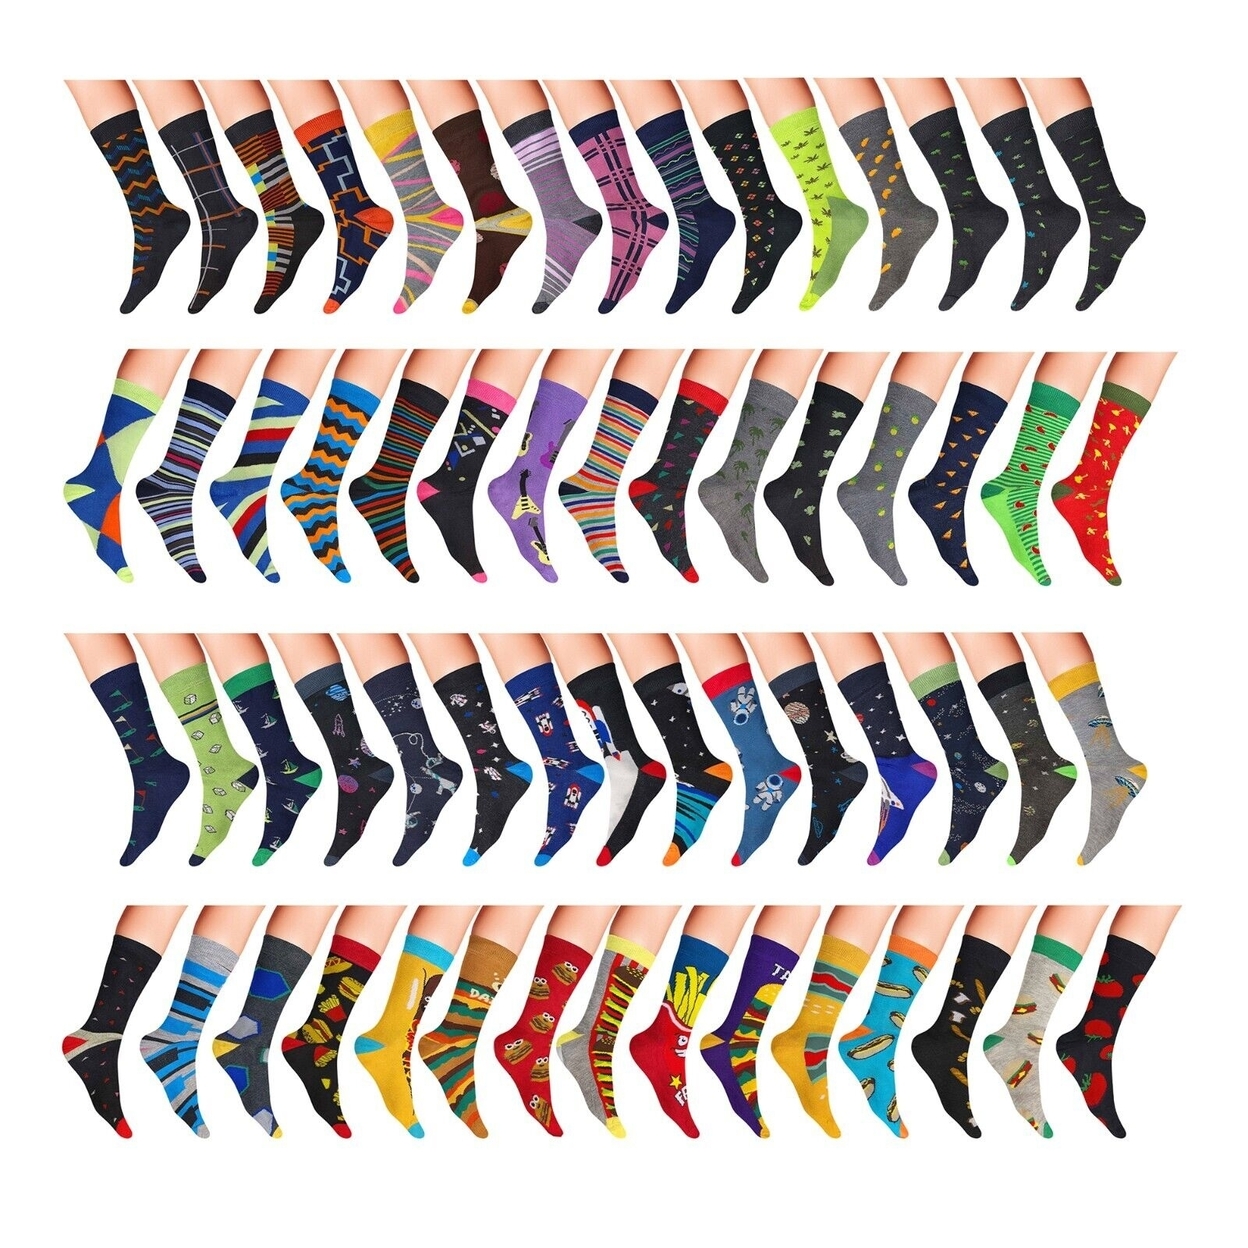 24-Pairs: Men's James Fiallo Premium Quality Fun Printed Dress Socks - Polka Dots